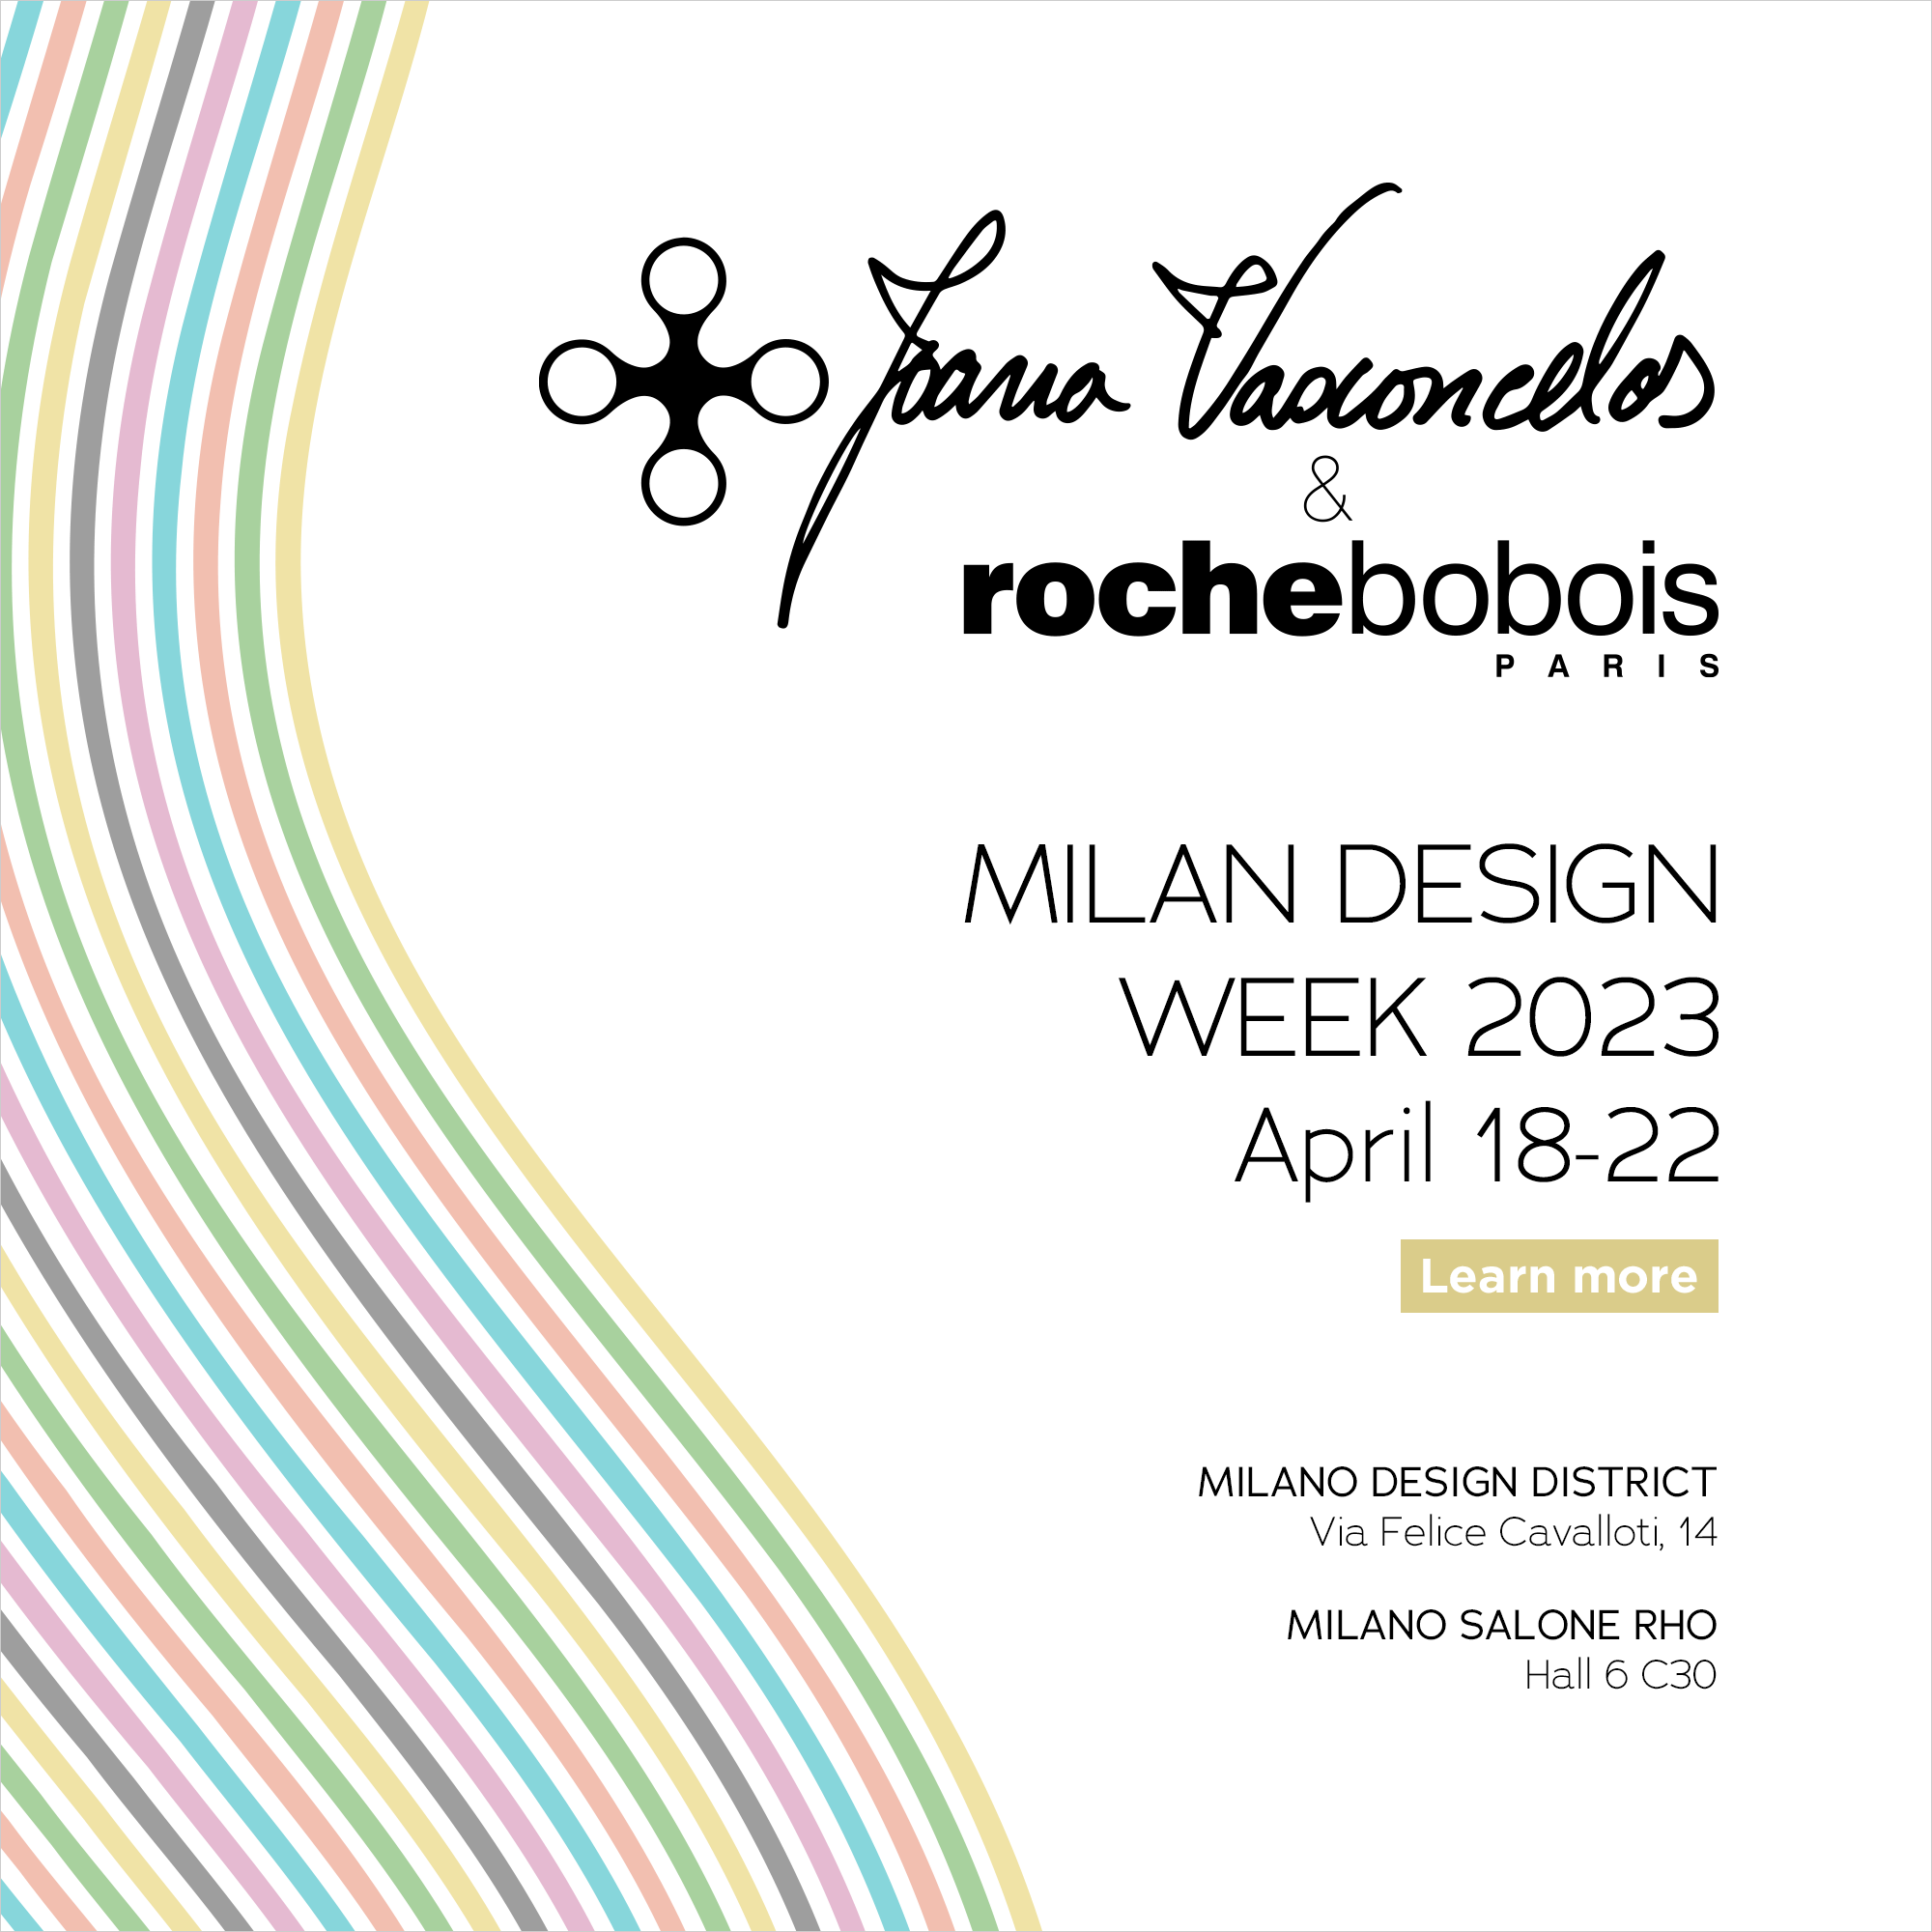 Joana Vasconcelos & Roche Bobois - Milan Design Week 2023 - April 18-22